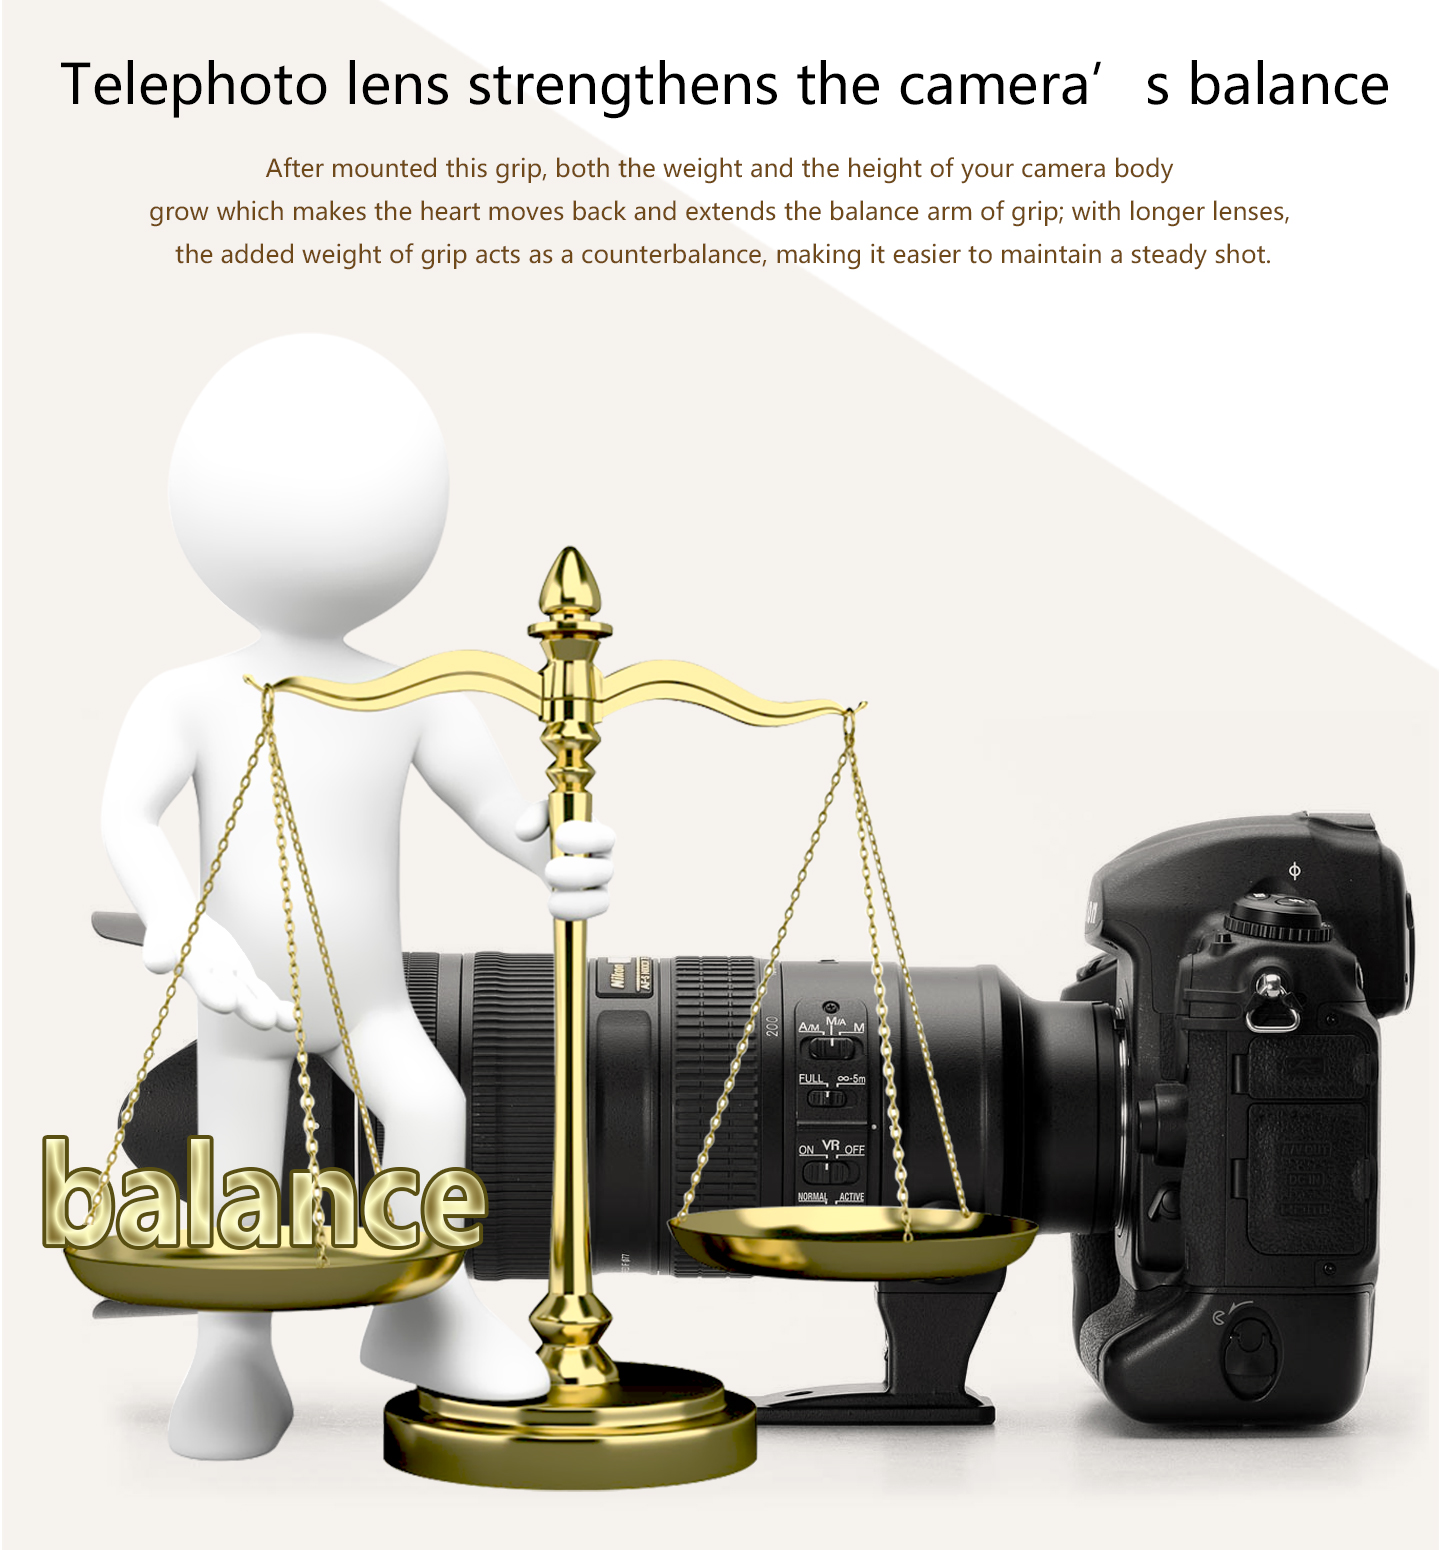 Telephoto lens strengthens the camera's balance